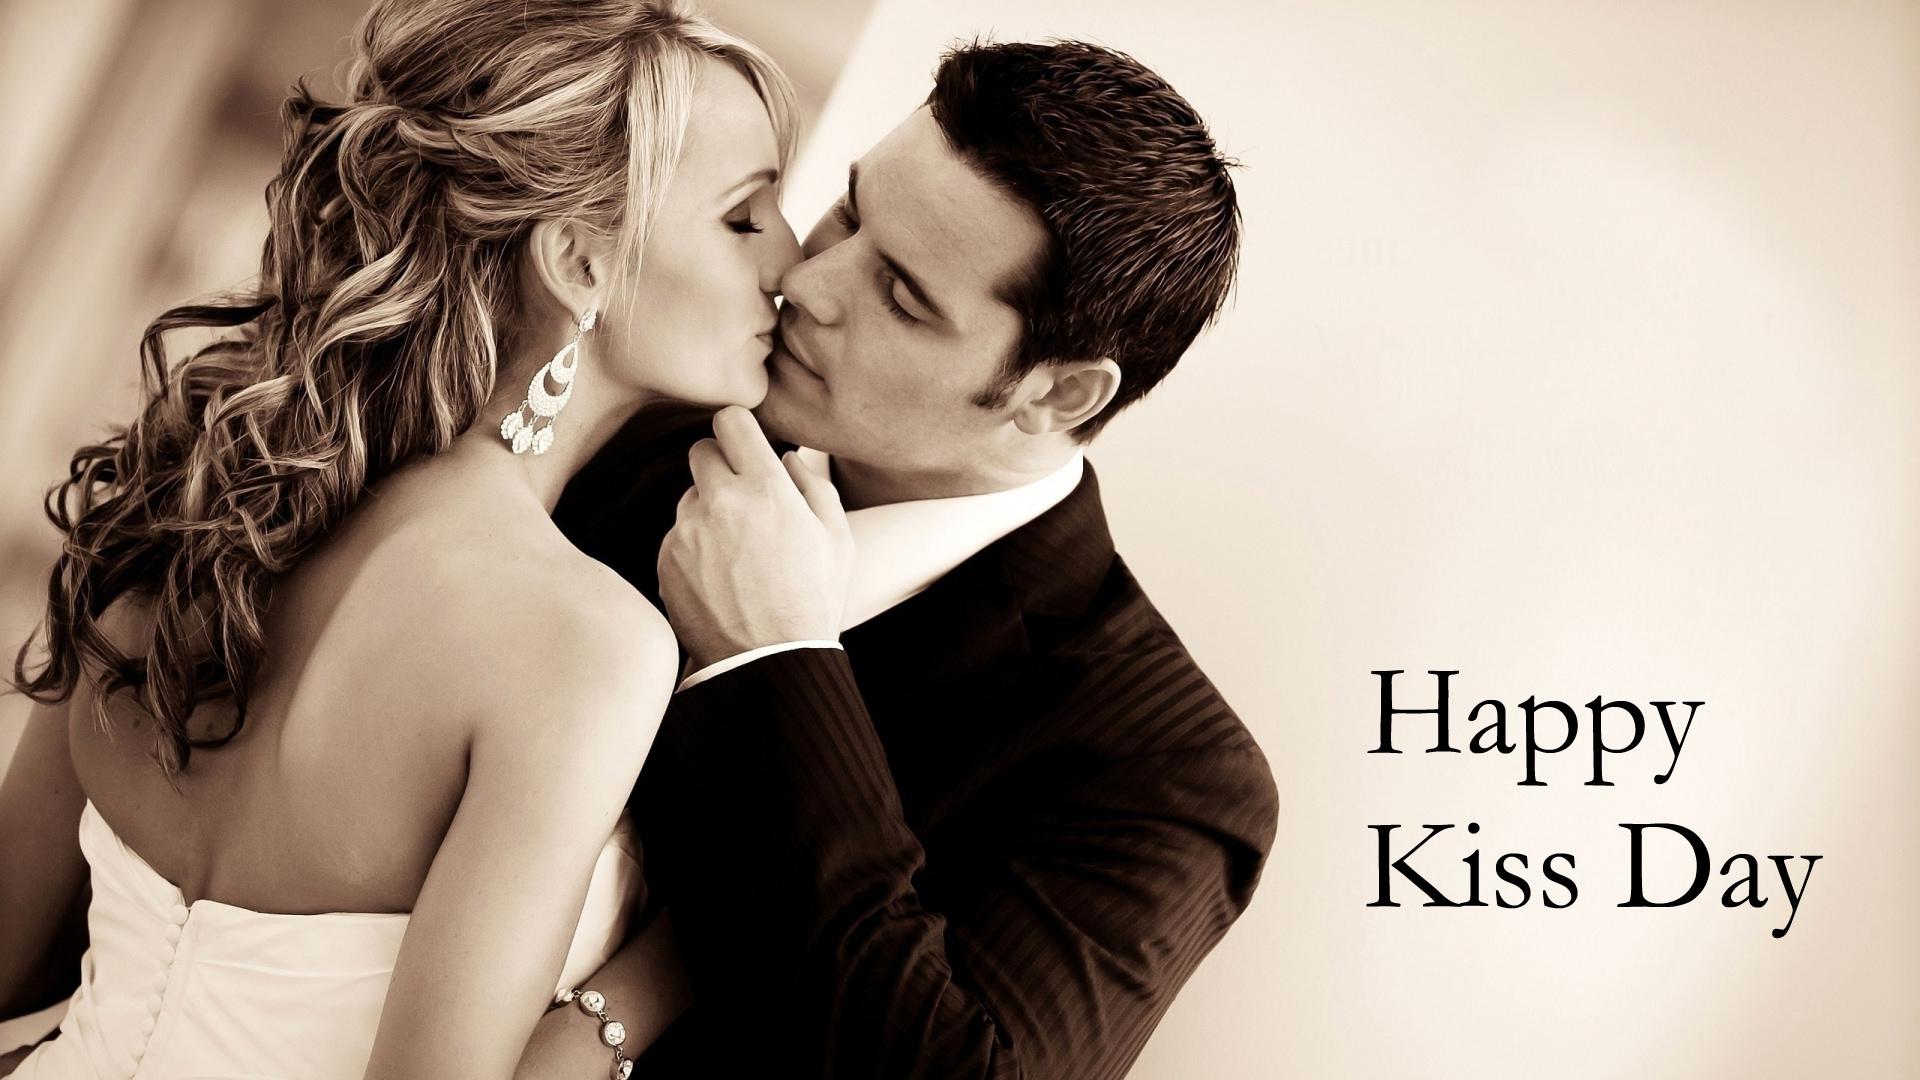 Happy kiss day HD wallpaper. HD Latest Wallpaper